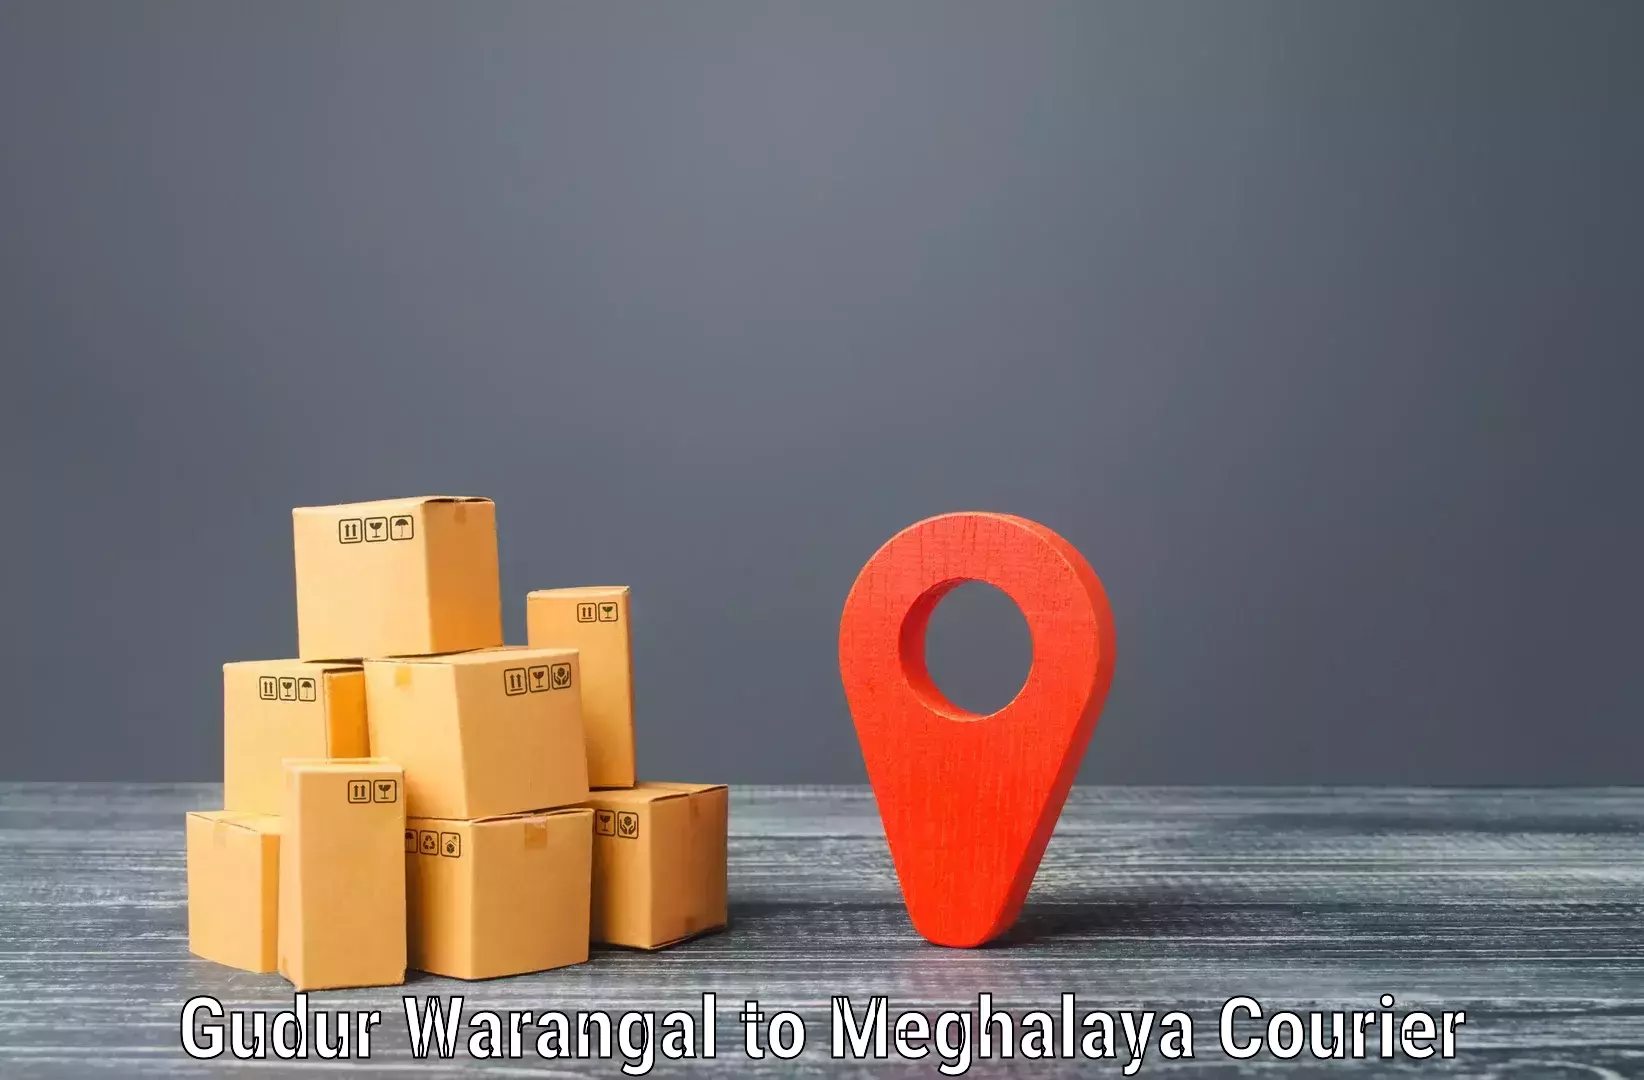 Same-day delivery options Gudur Warangal to Nongpoh